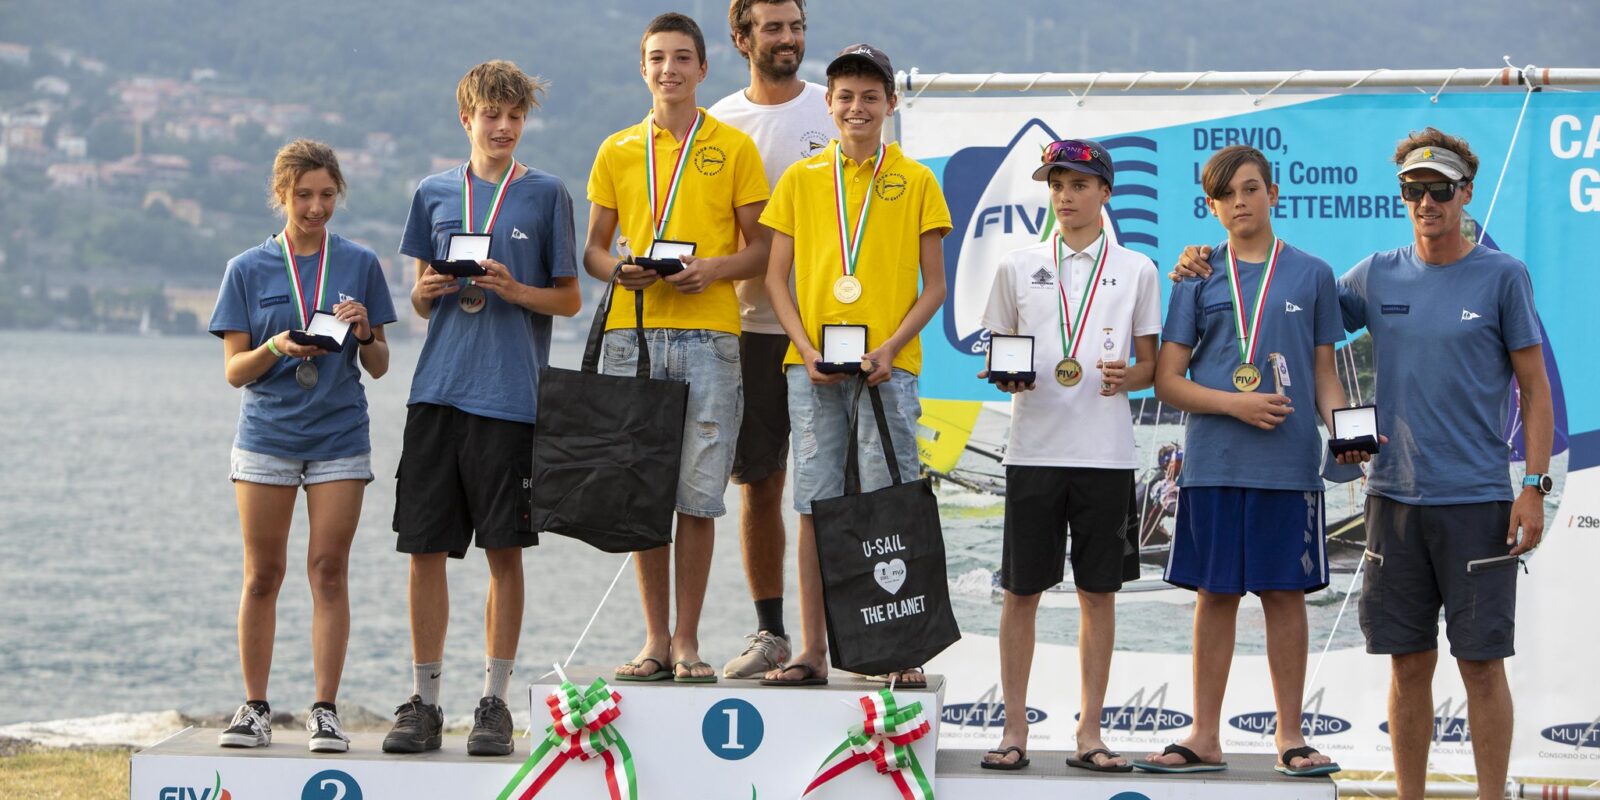 edoardo alex brighenti terzo posto campionati italiani rsfeva dervio 2021